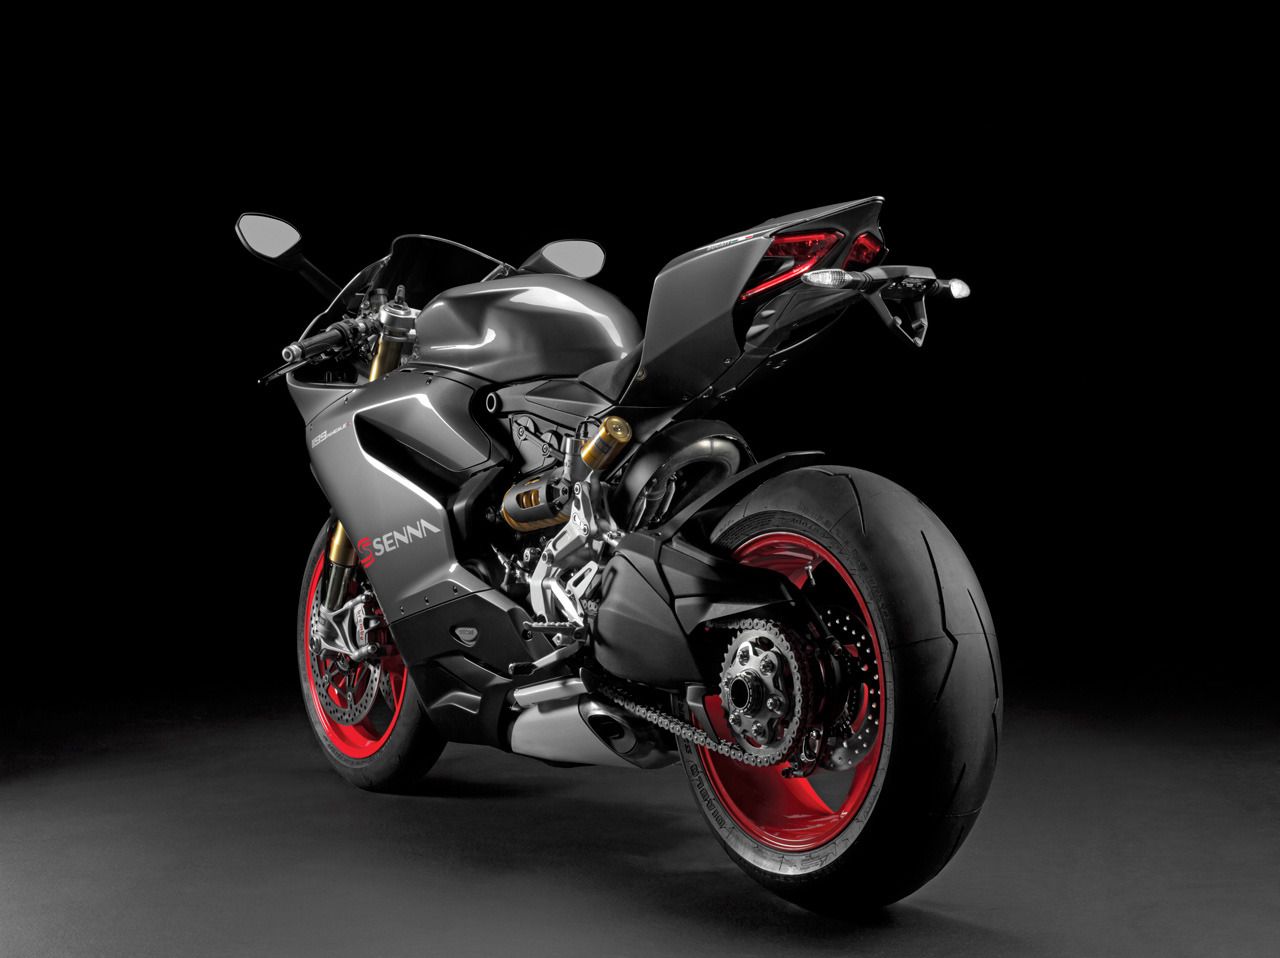 Black-Ducati-1199-Panigale-S-Back-View-Wallpapers.jpg